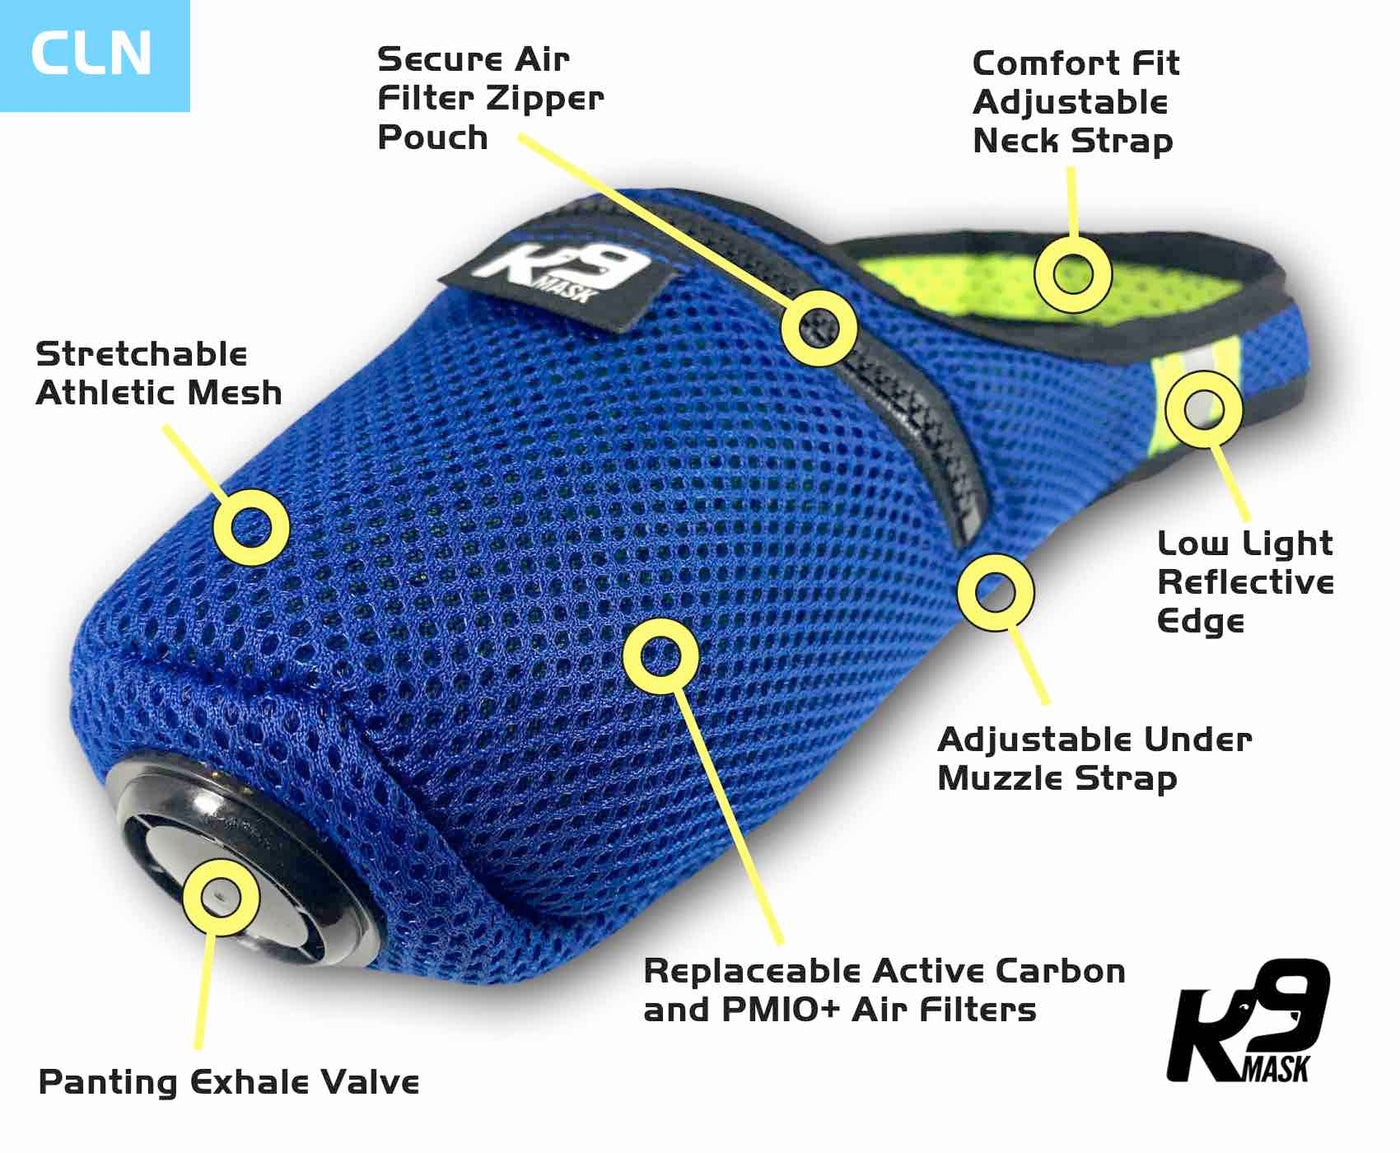 Clean Breathe K9 Mask®